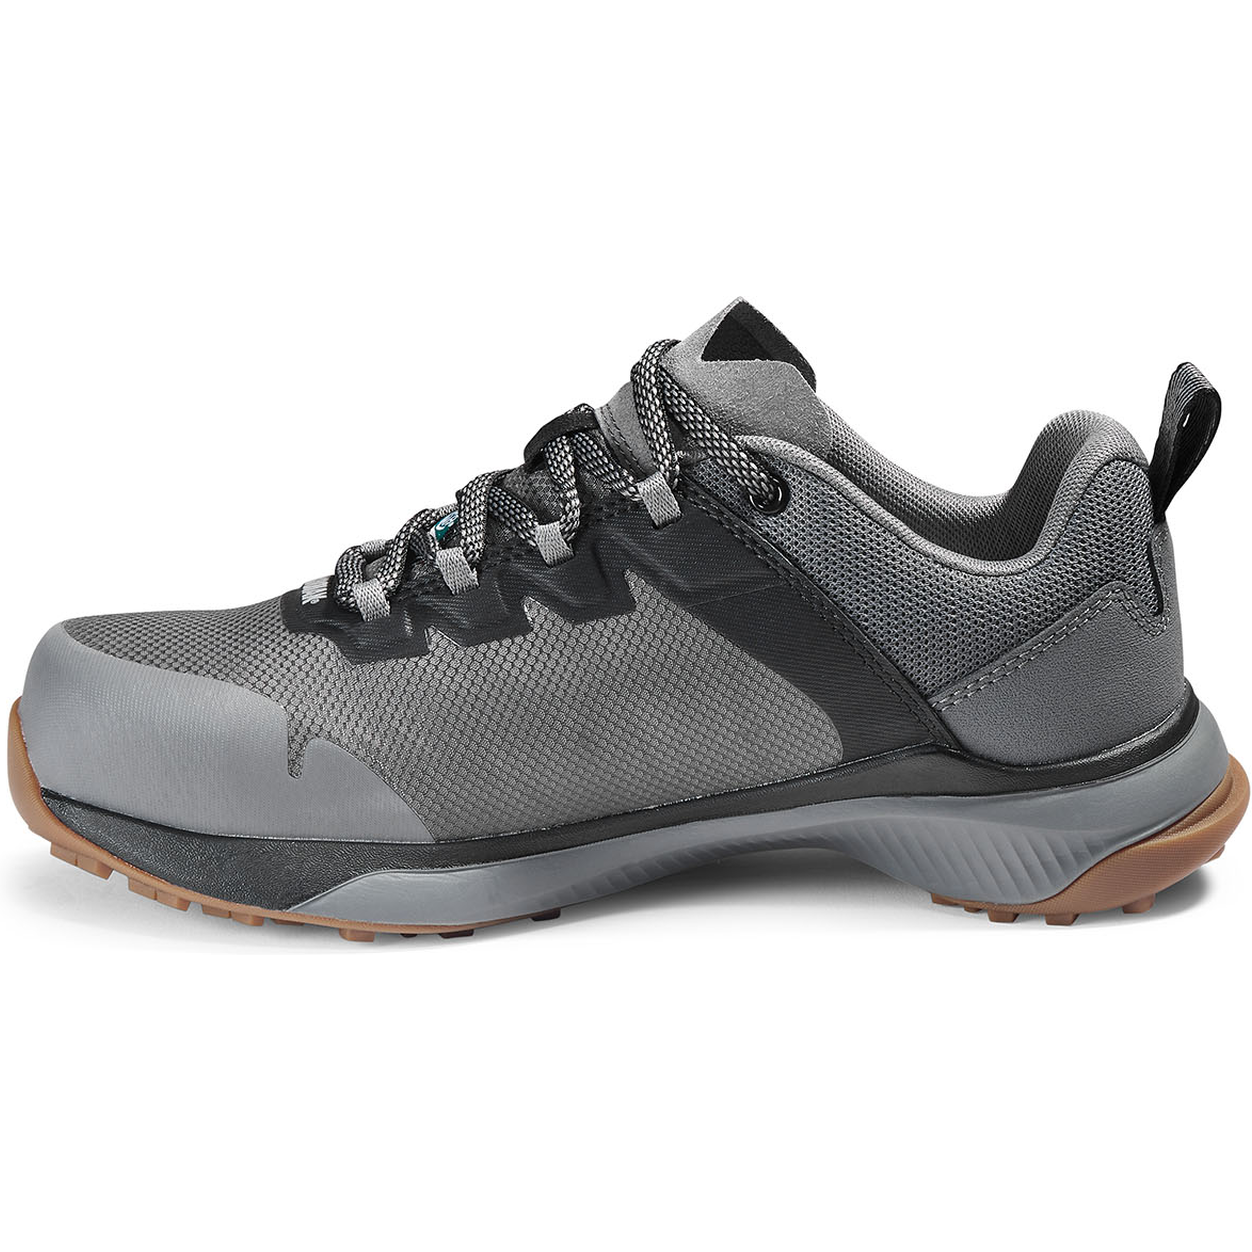 Kodiak Women's Quicktrail Low CT Athletic Safety Work Shoe -Gray- 4TGXGY  - Overlook Boots